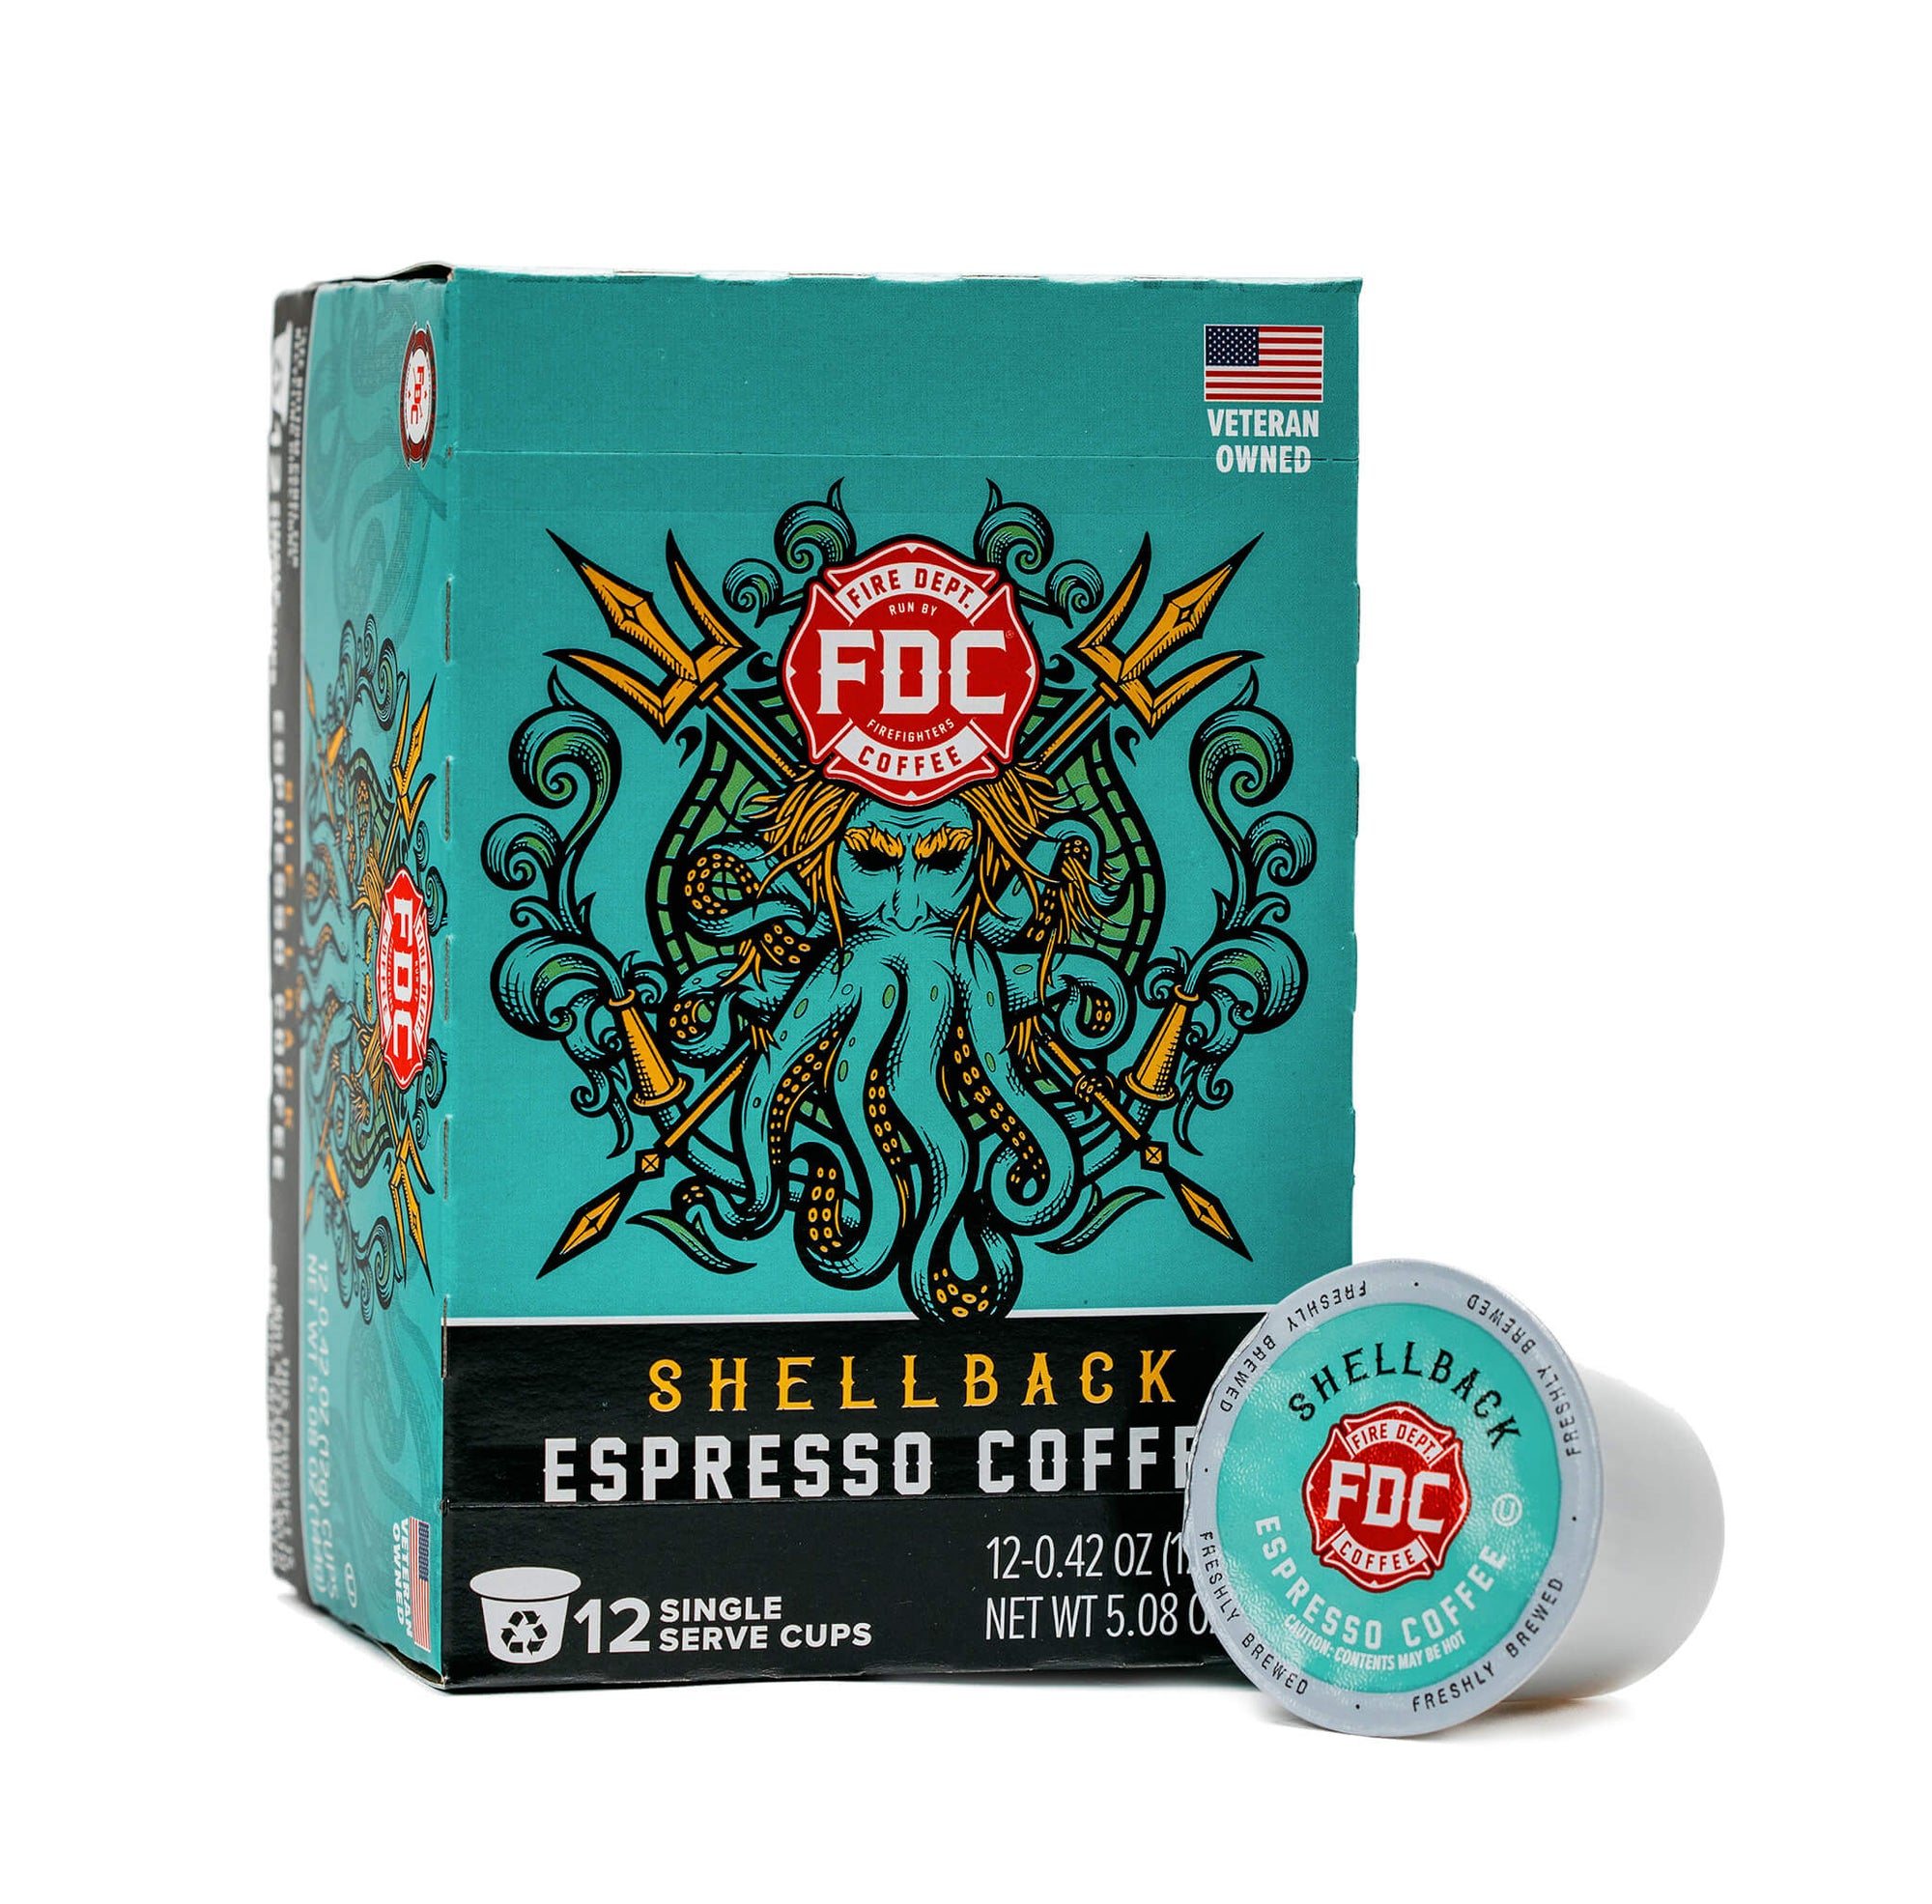 SHELLBACK ESPRESSO COFFEE PODS, 12 BOXES (144 CUPS)